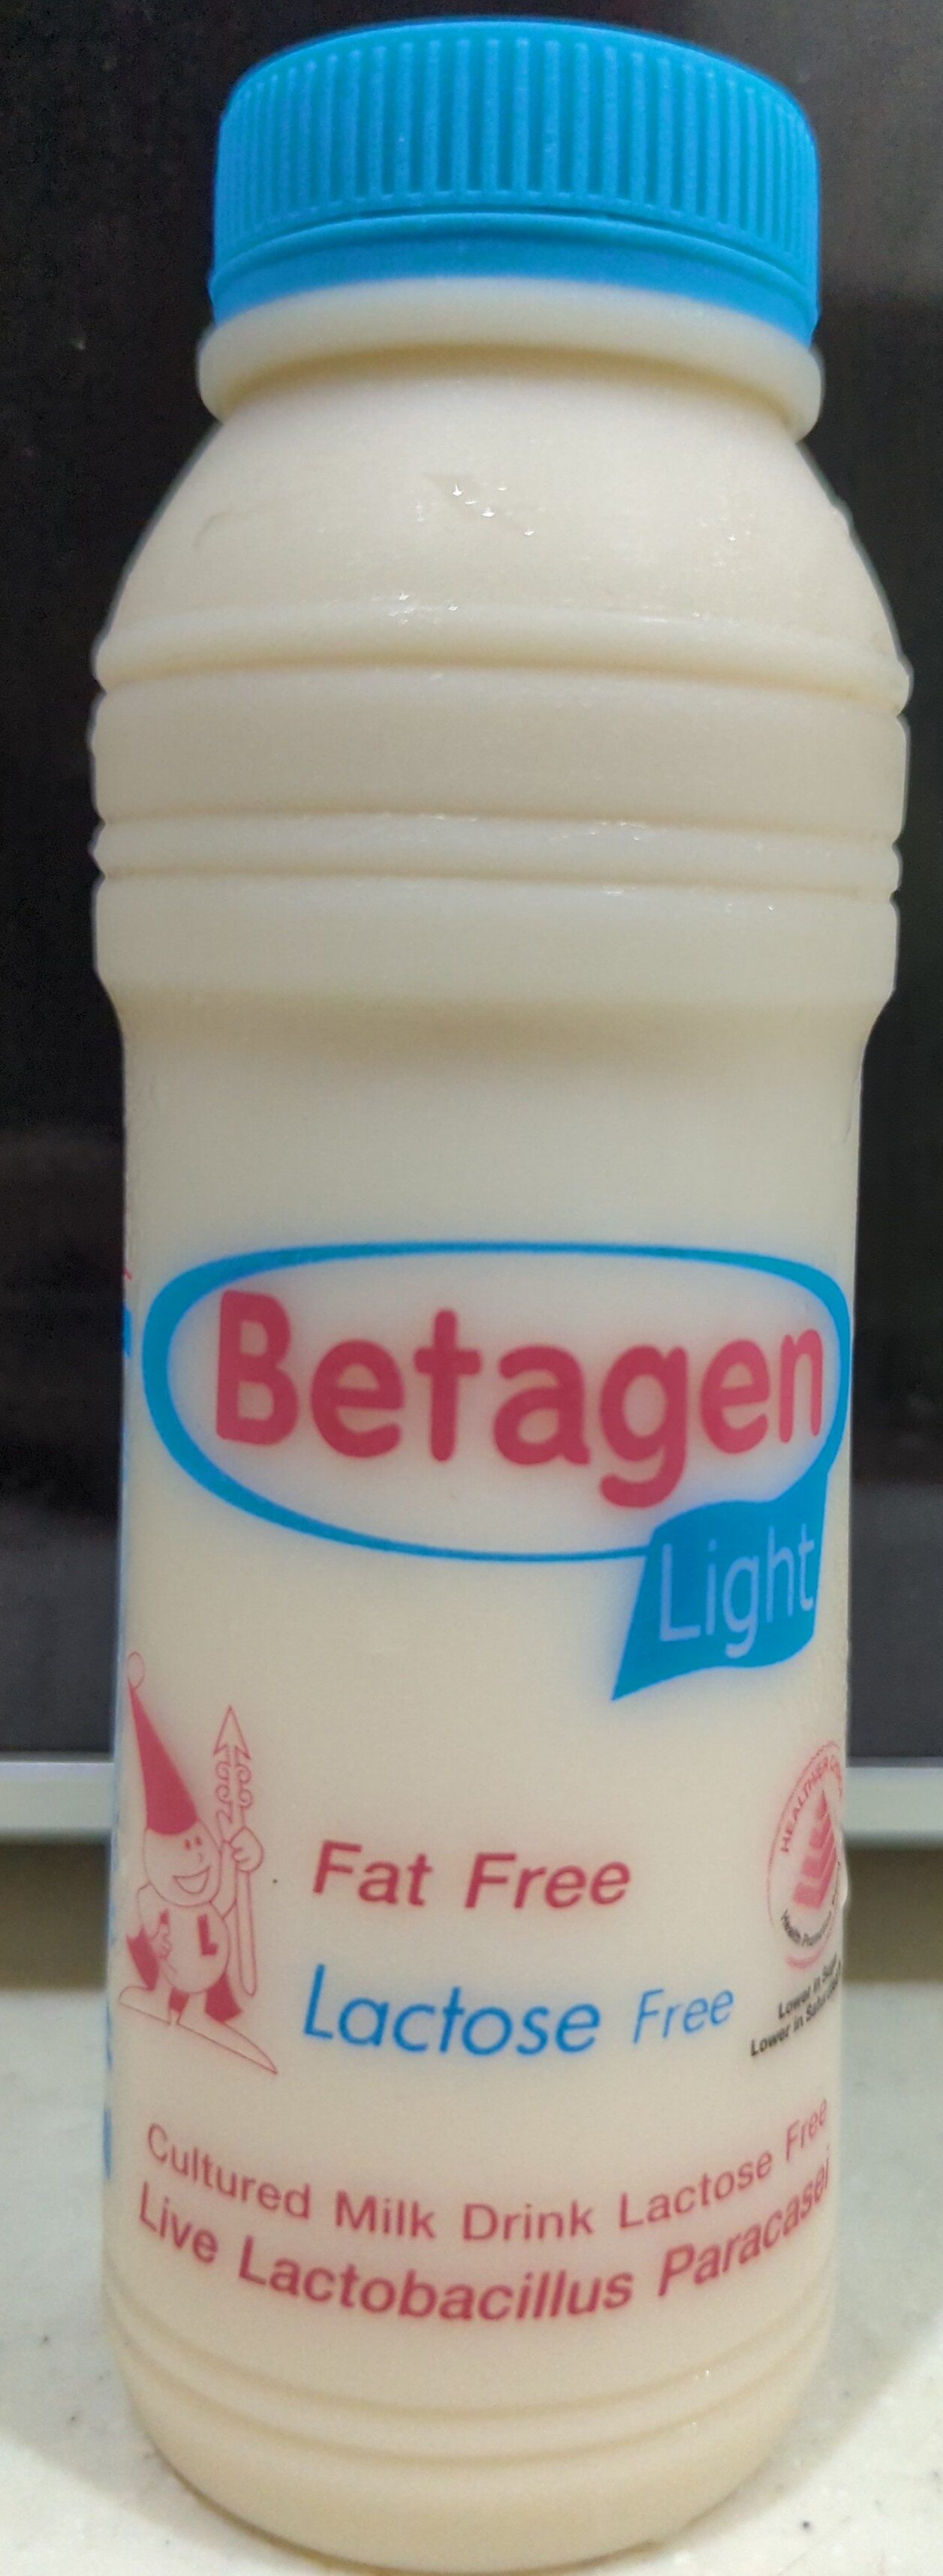 Betagen Light - Product